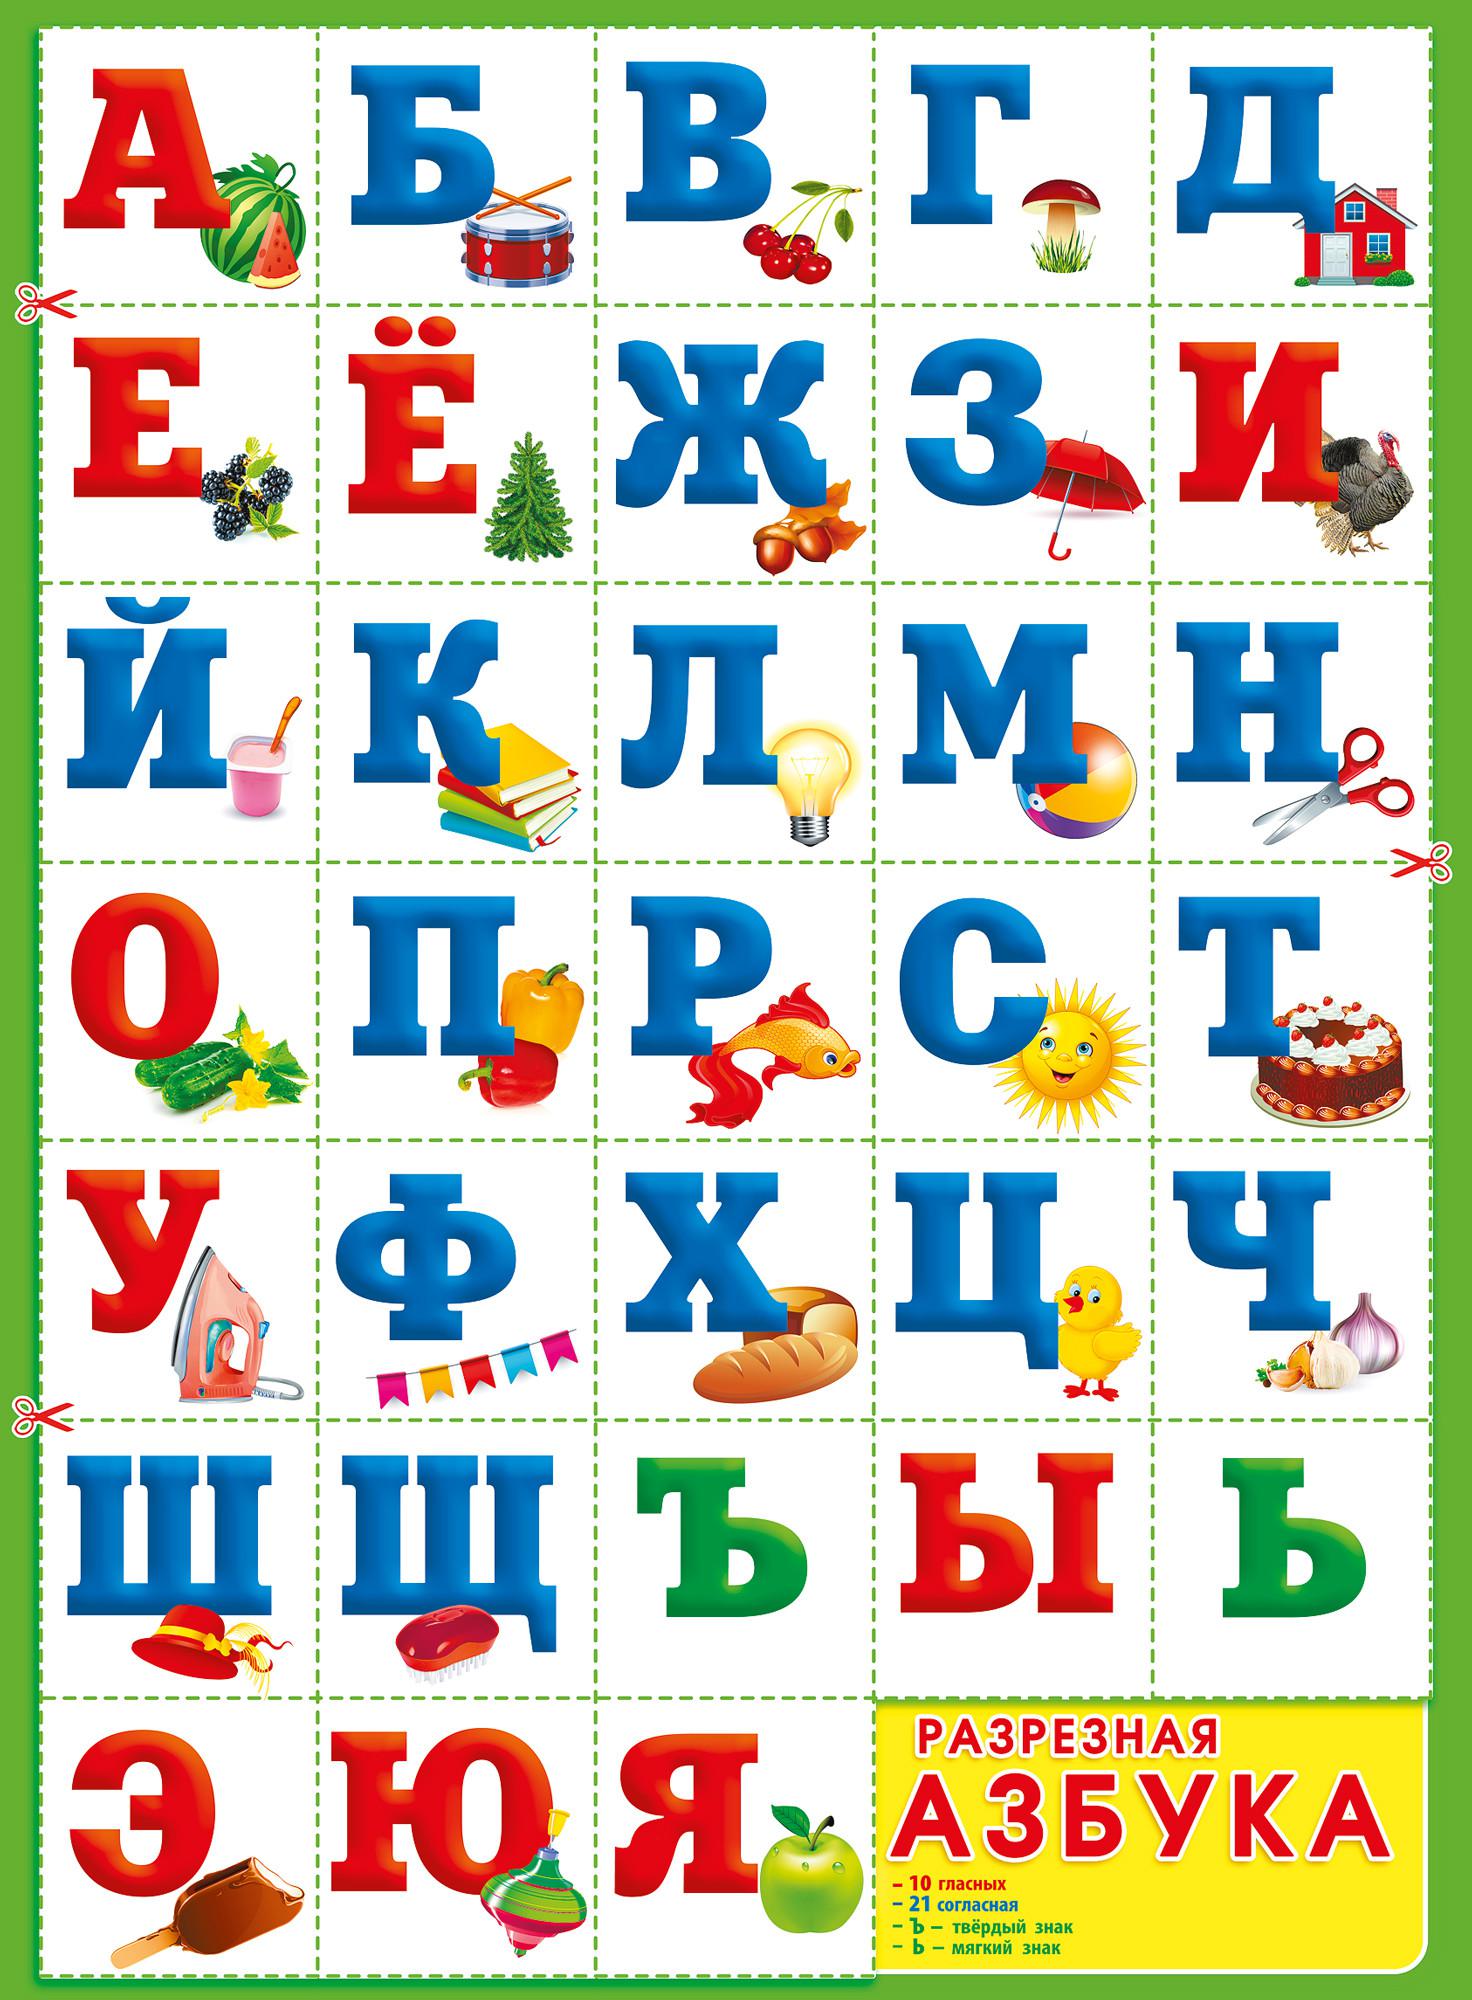 Порядок русского алфавита картинка. Плакат "Азбука" разрезной, а2. Плакат Азбука разрезной а1. Разрезная Азбука для детей. Алфавит для детей.